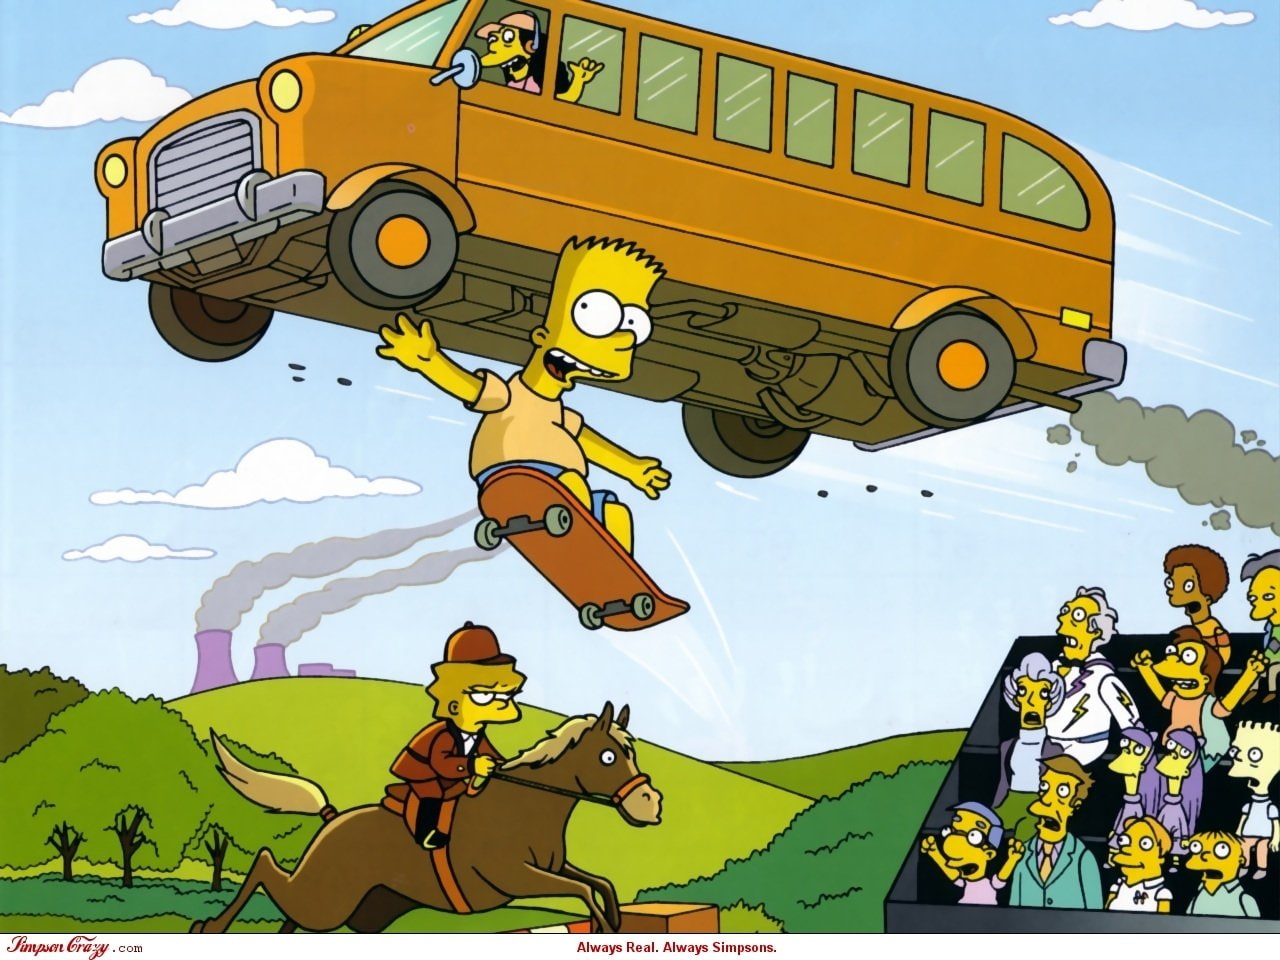 The Simpsons, Bart Simpson, Lisa Simpson, Seymour Skinner